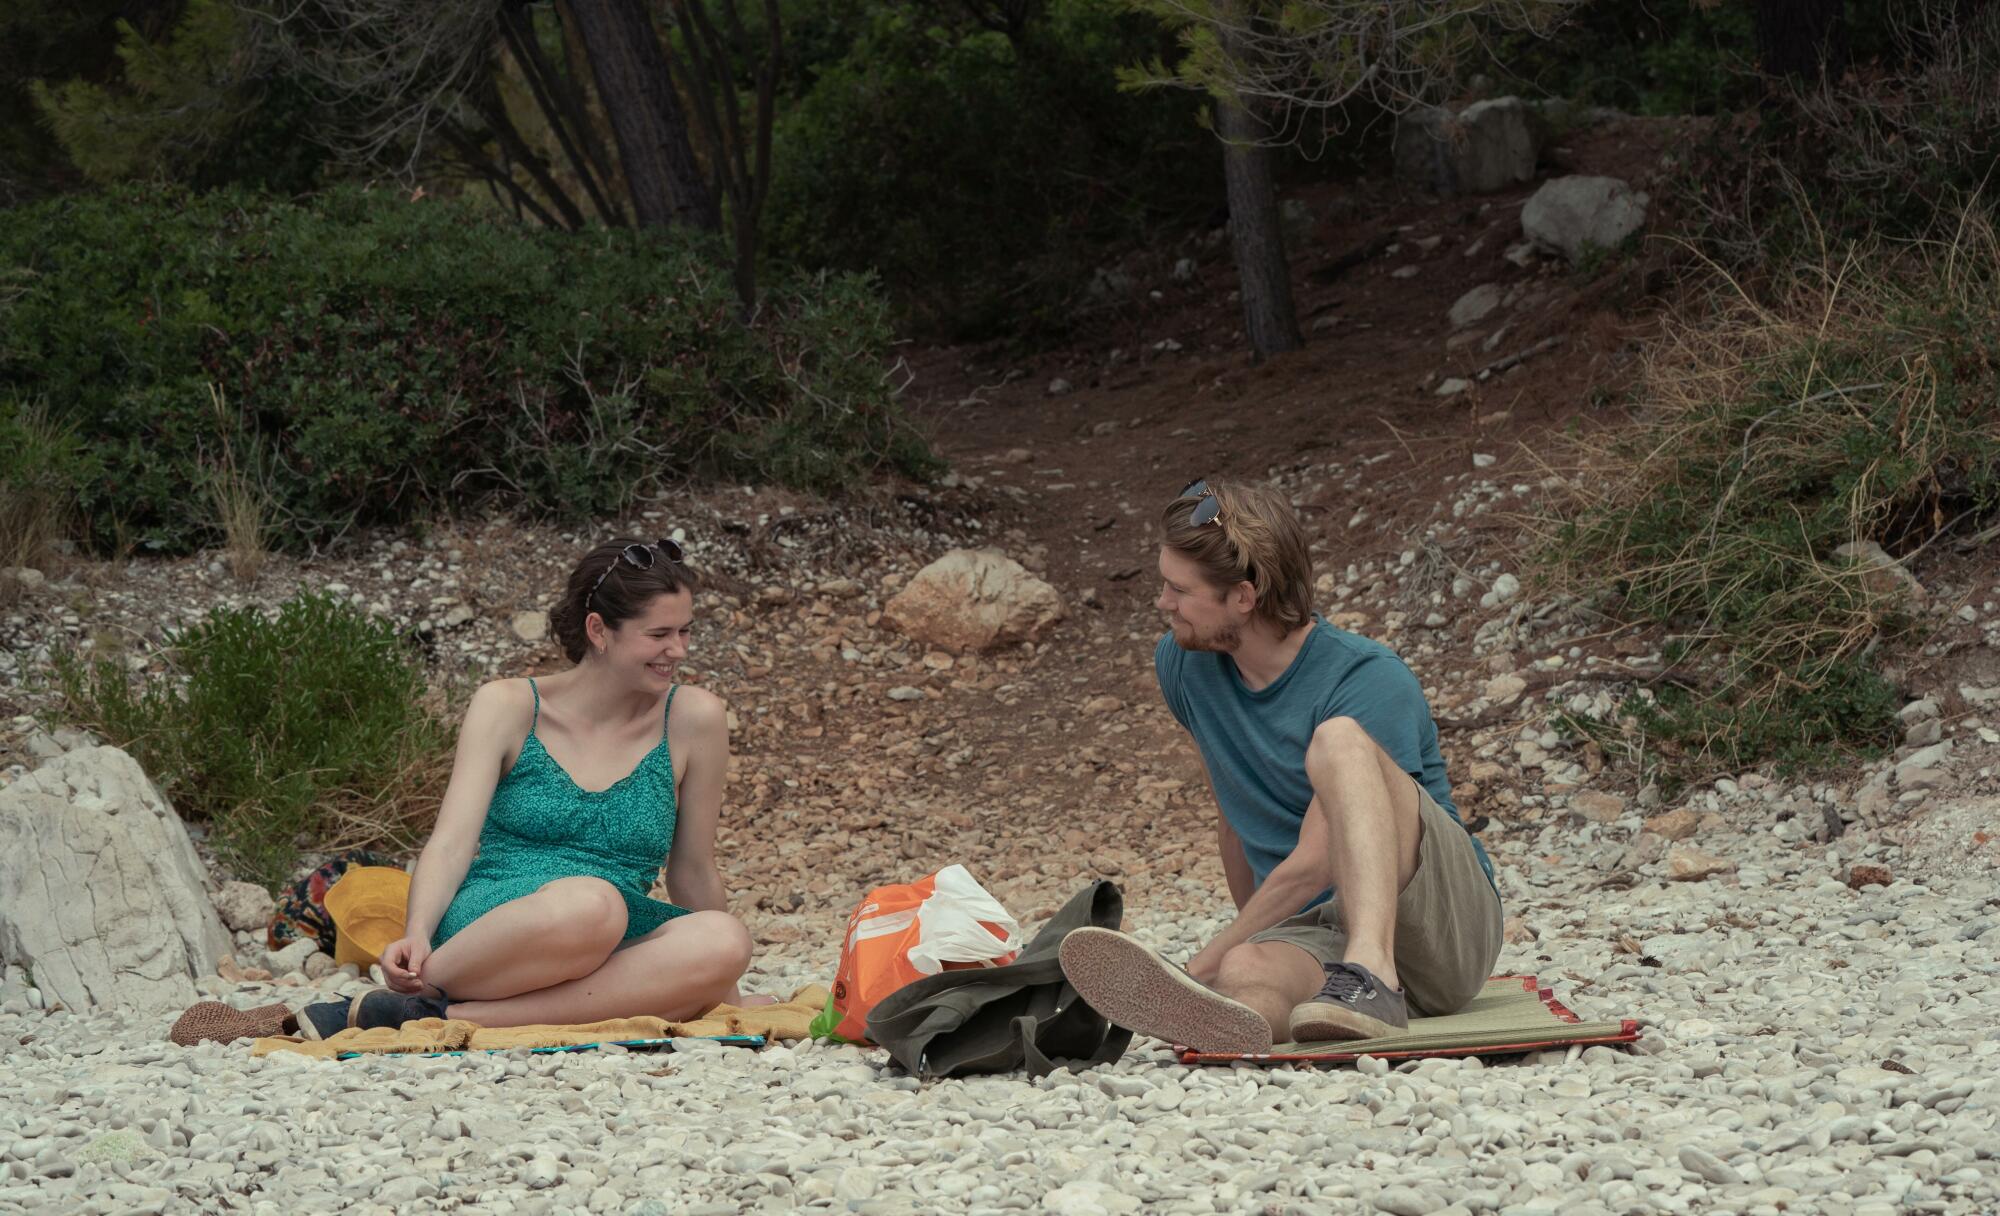 Frances and Nick talk on the beach in Croatia.